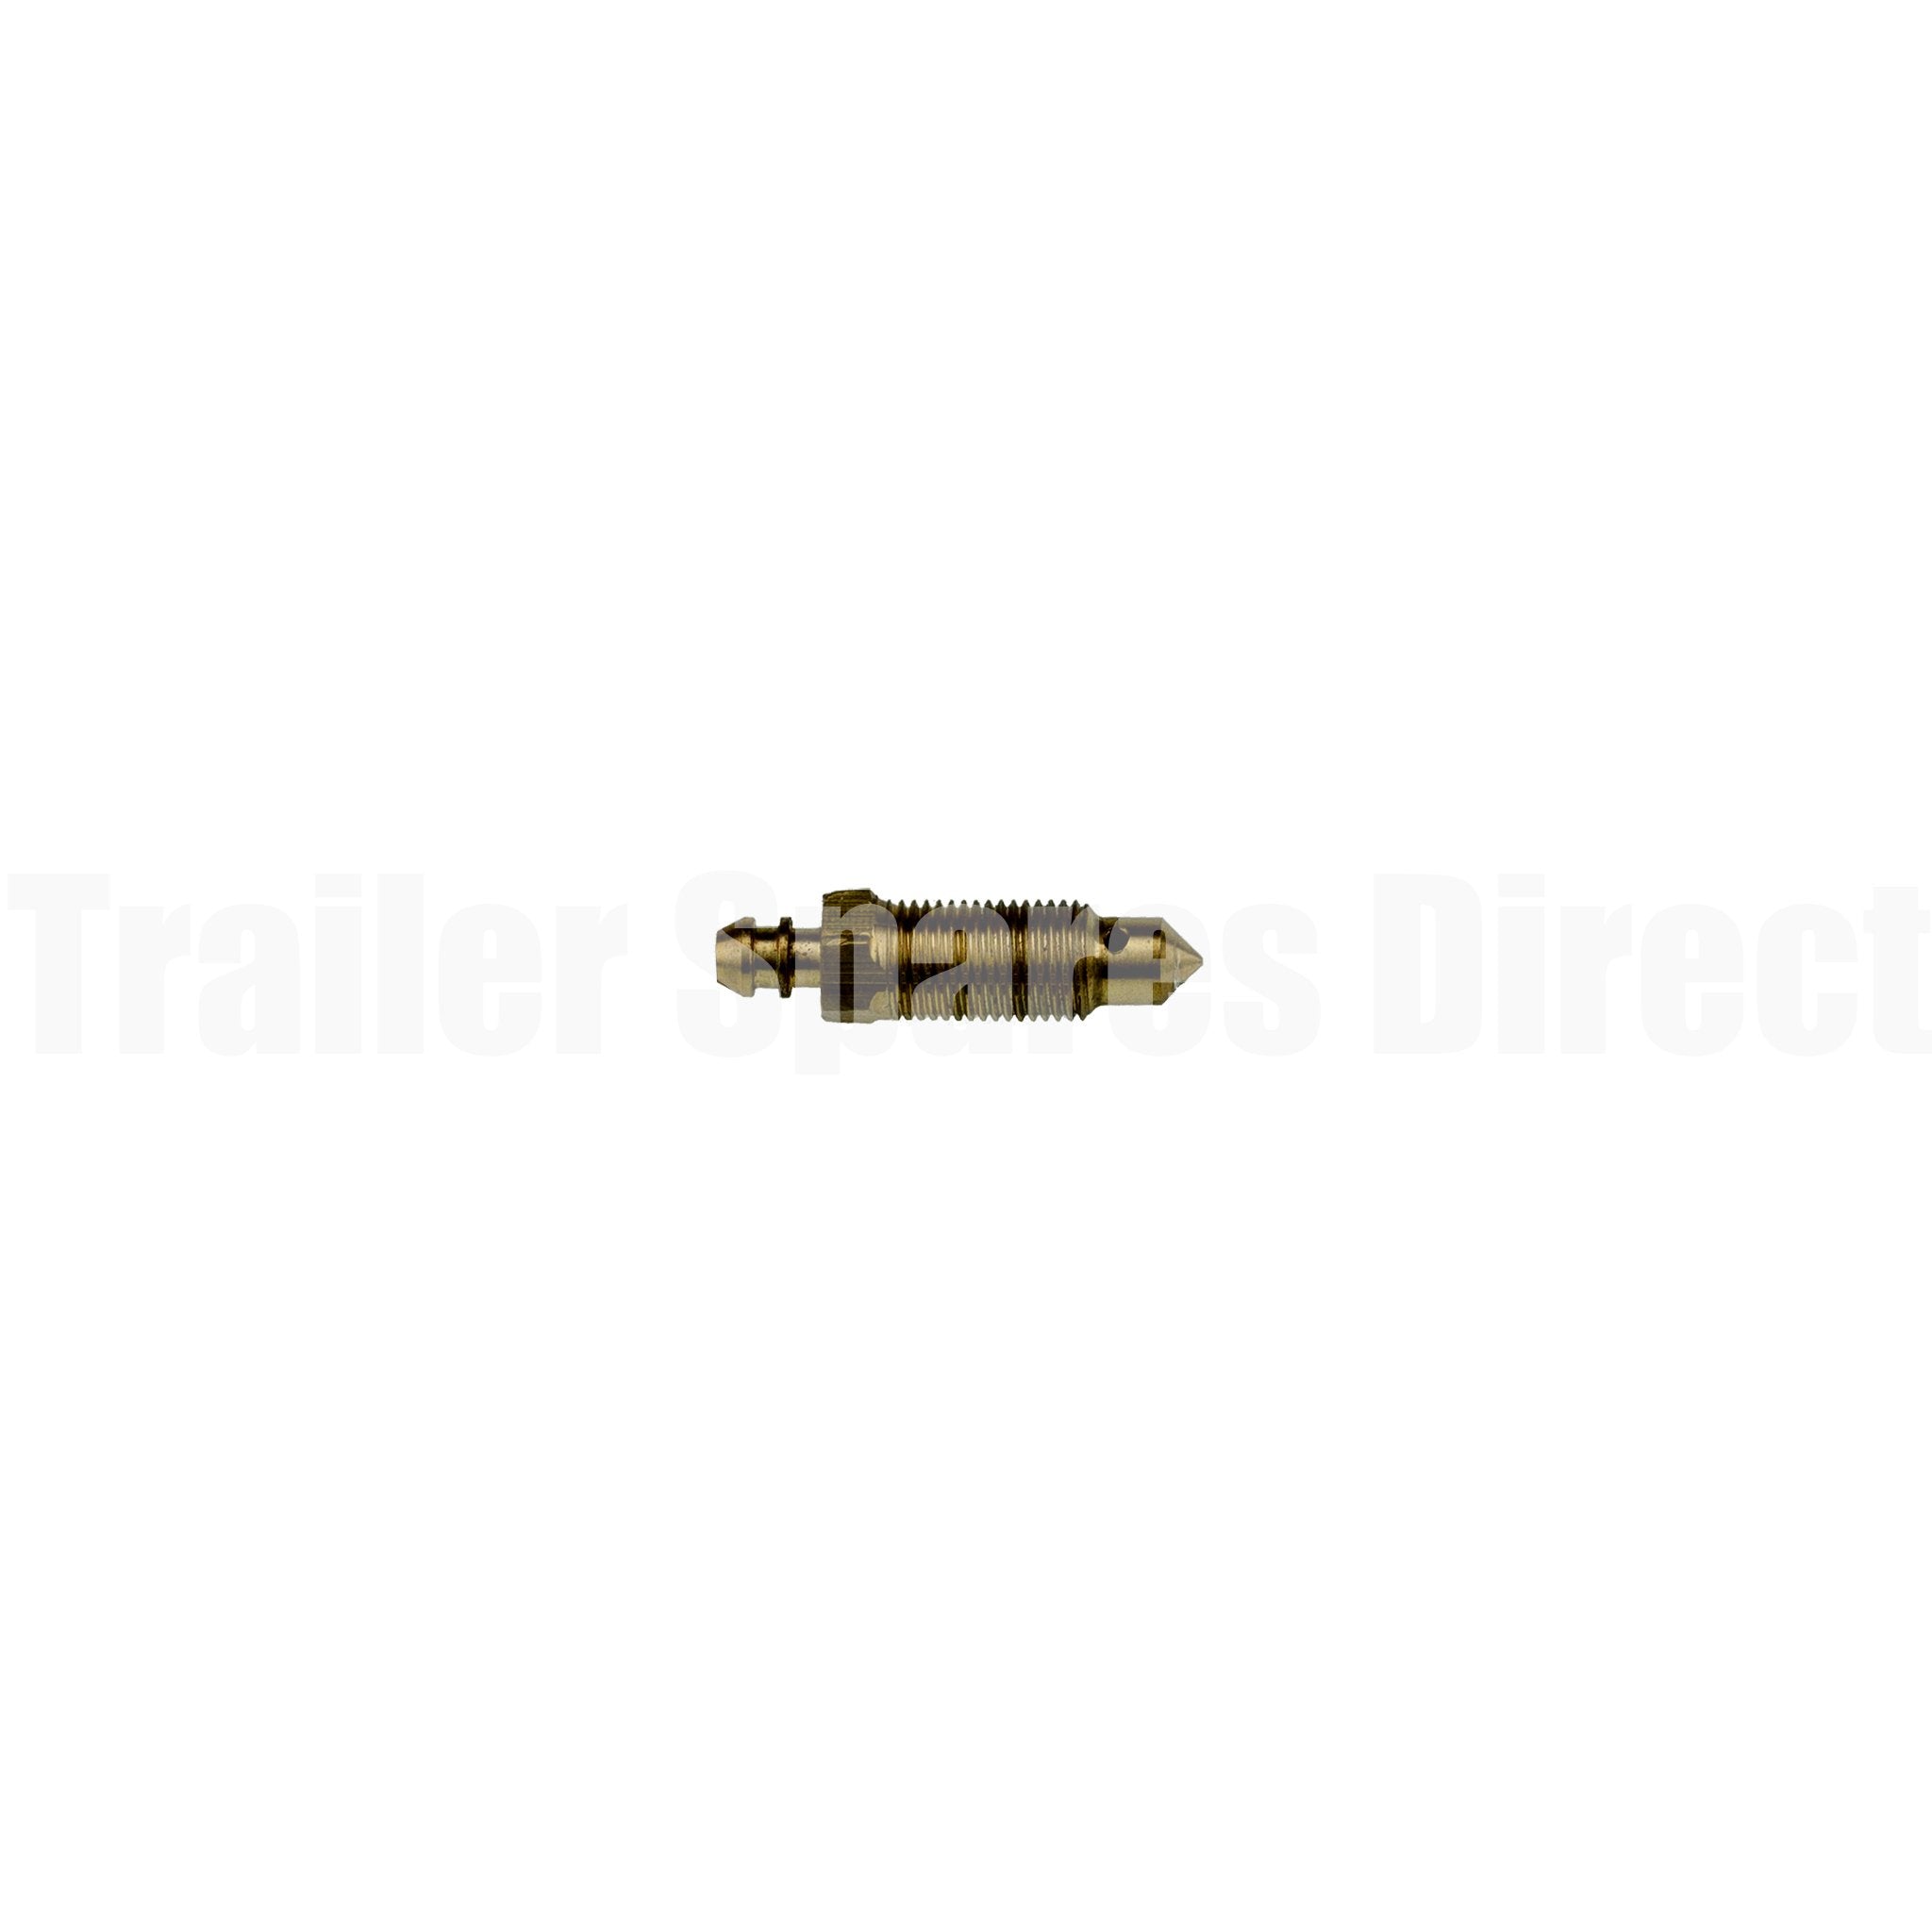 Brass bleeder screw long (38mm) for PBR caliper